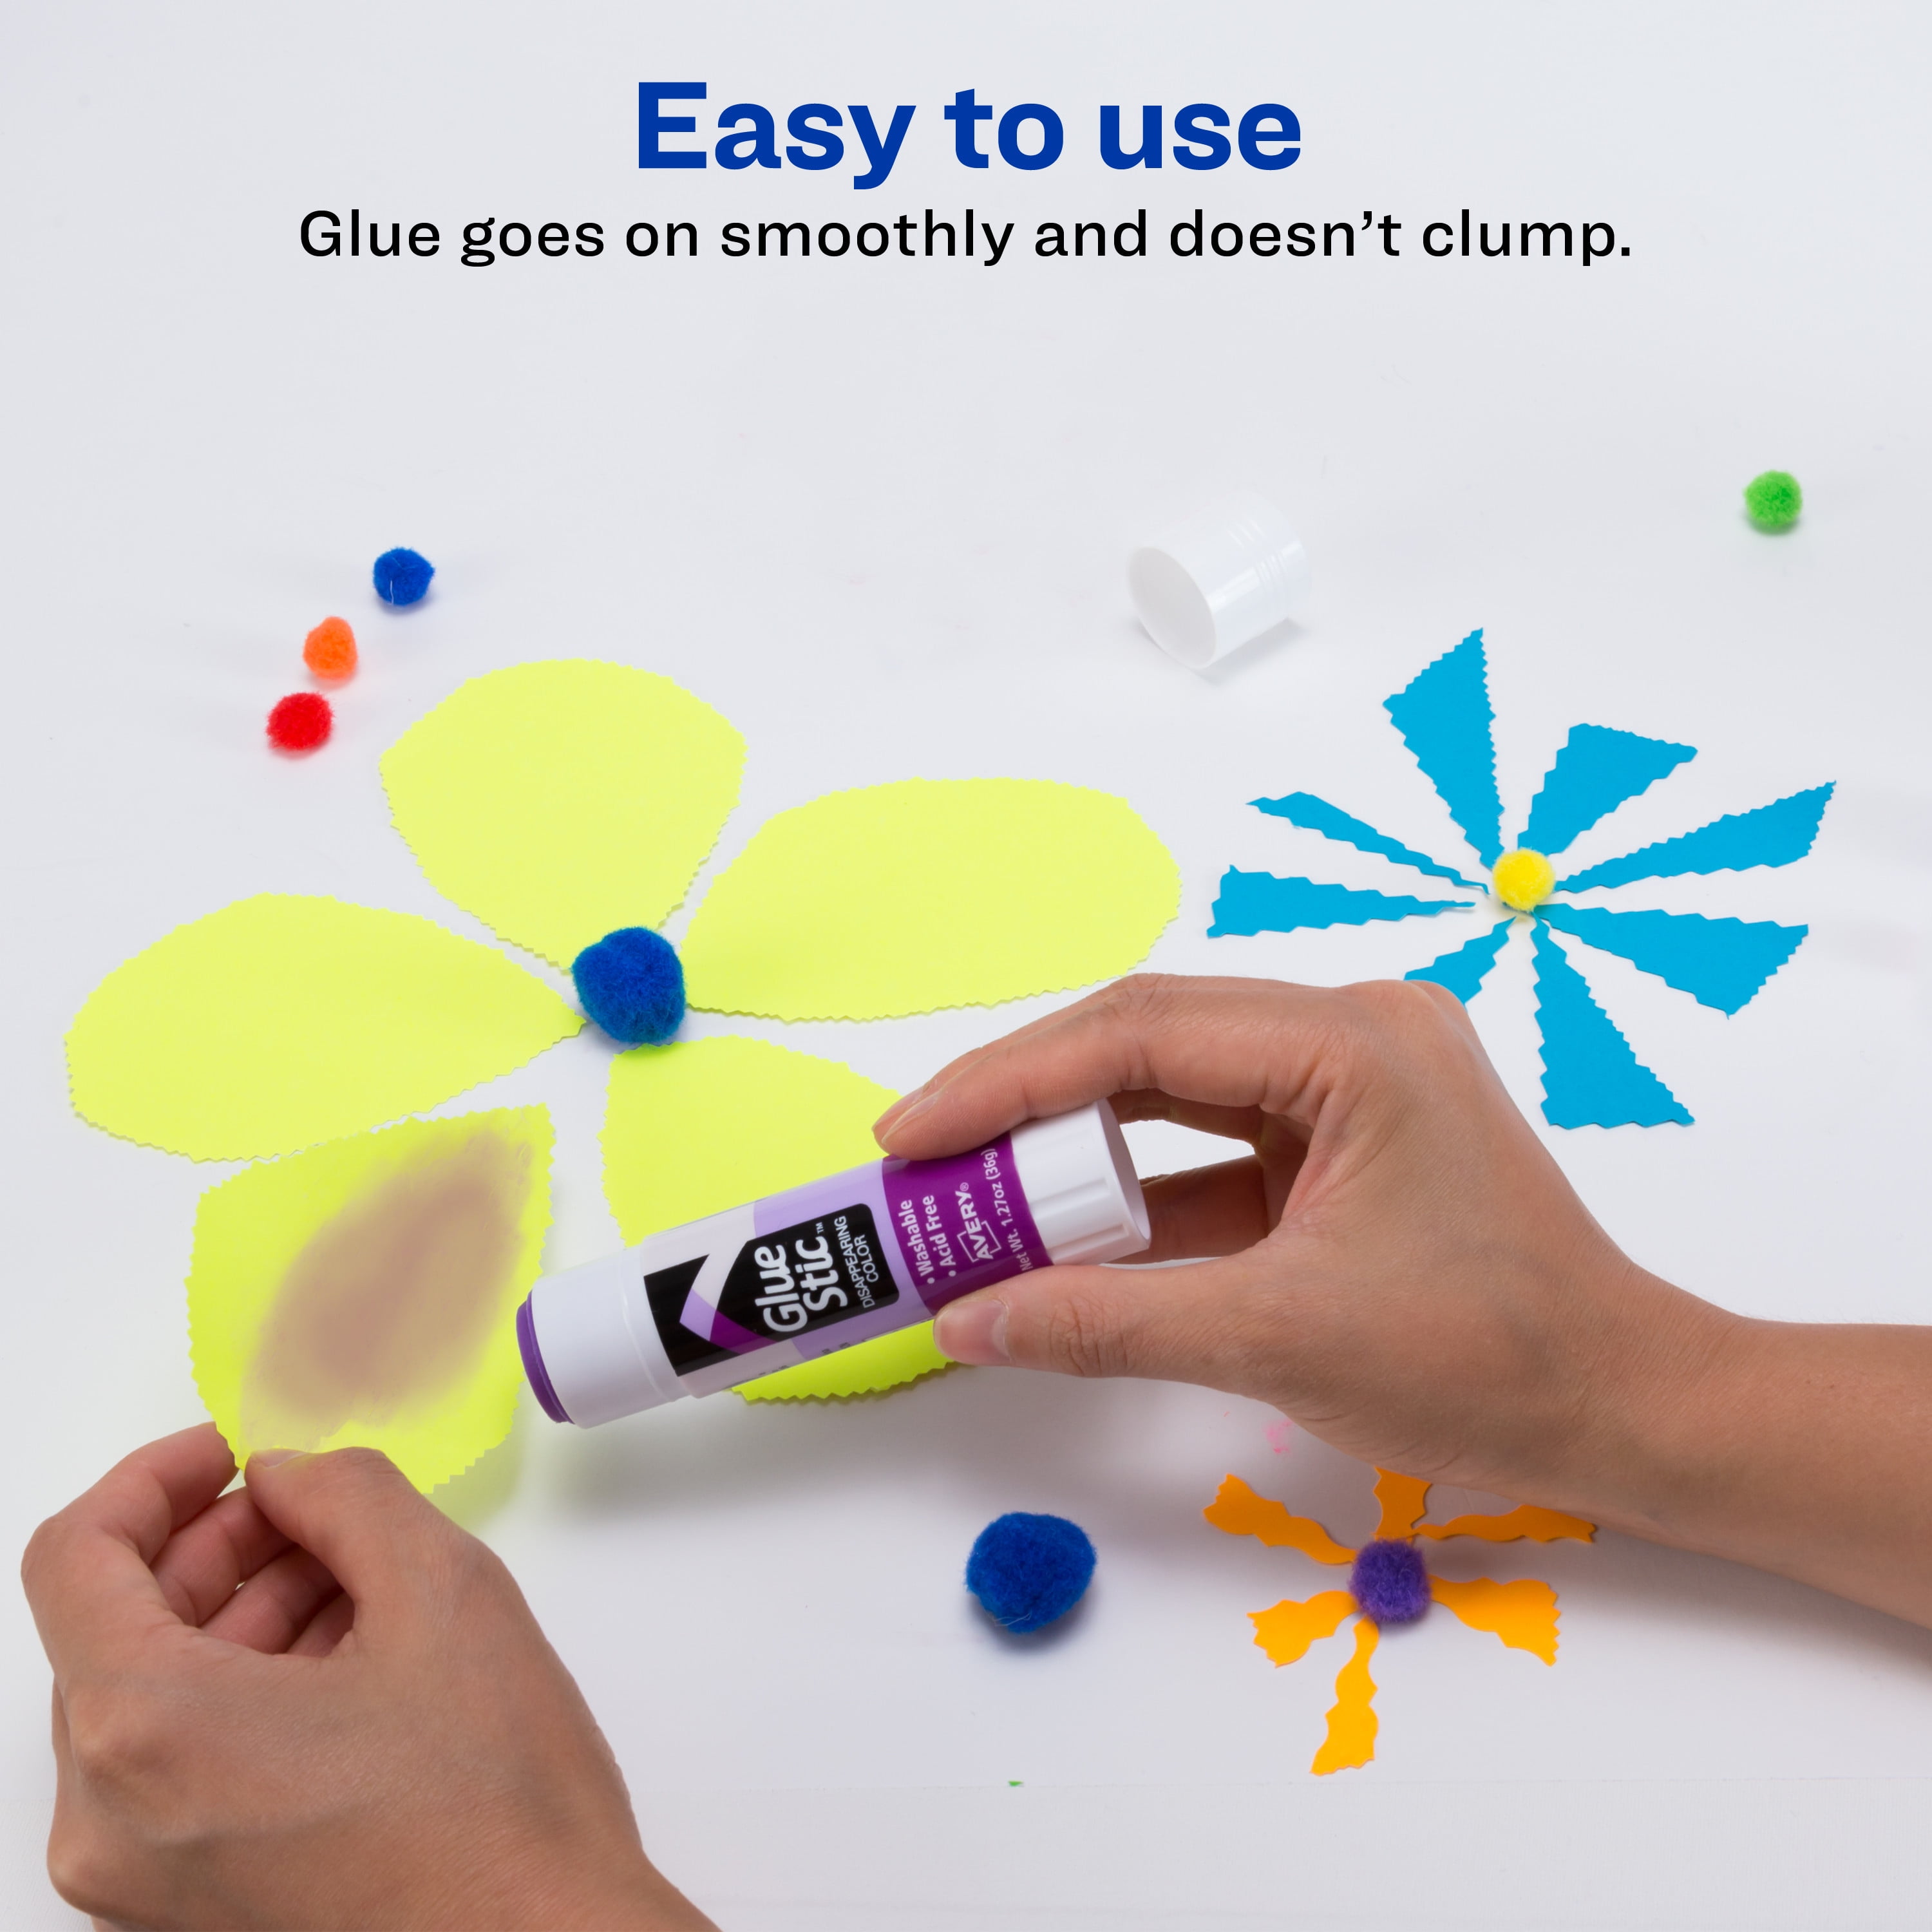 Avery Glue Sticks Disappearing Purple Color, 1.27 oz, Washable, Nontoxic,  Permanent Glue, 12 Glue Stics (00226)